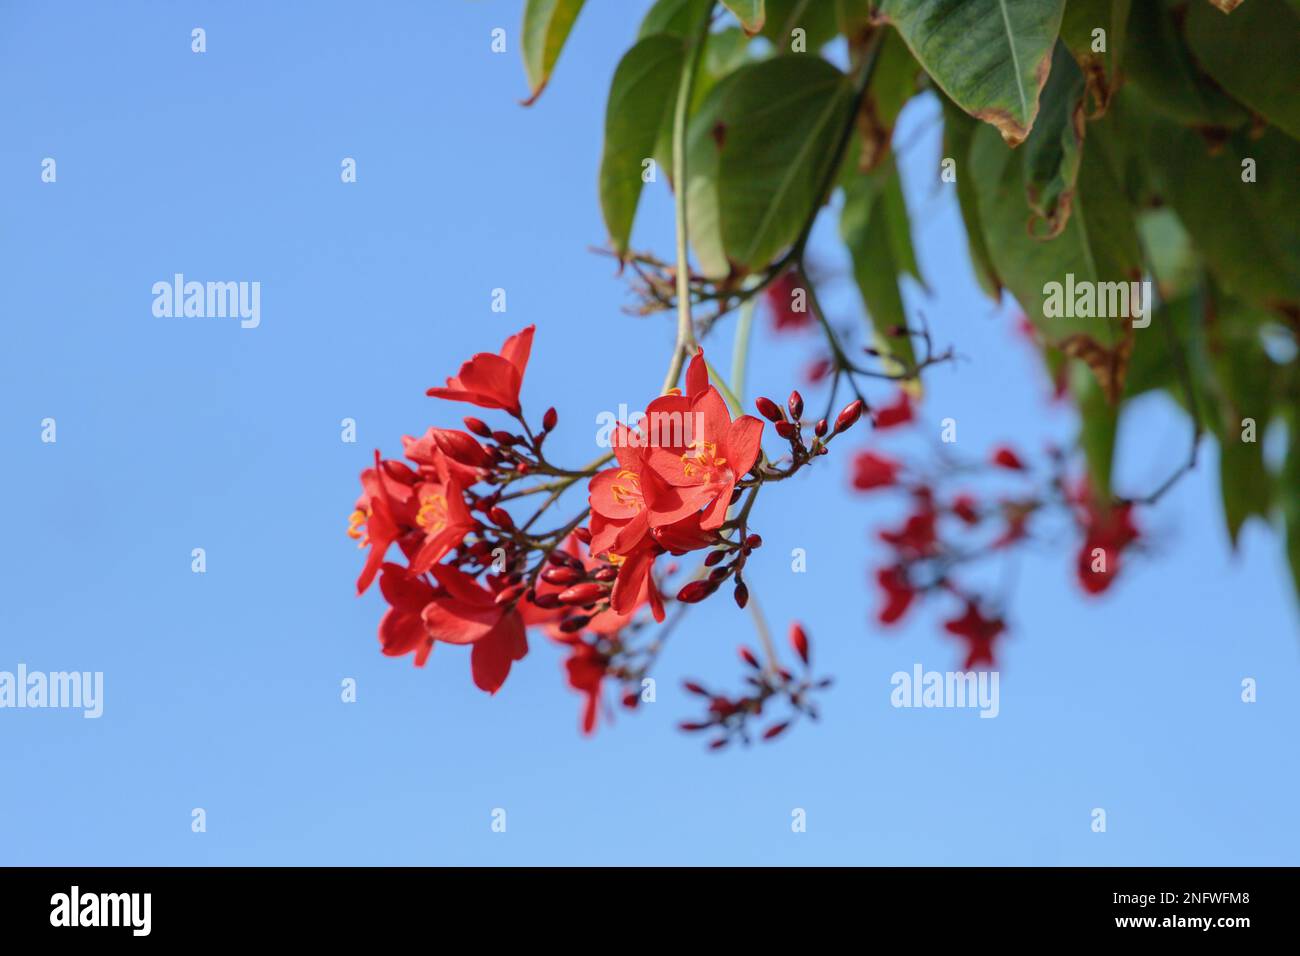 Orange-red blossoms of a peregrina bush (Jatropha integerrima) before blue sky. Stock Photo